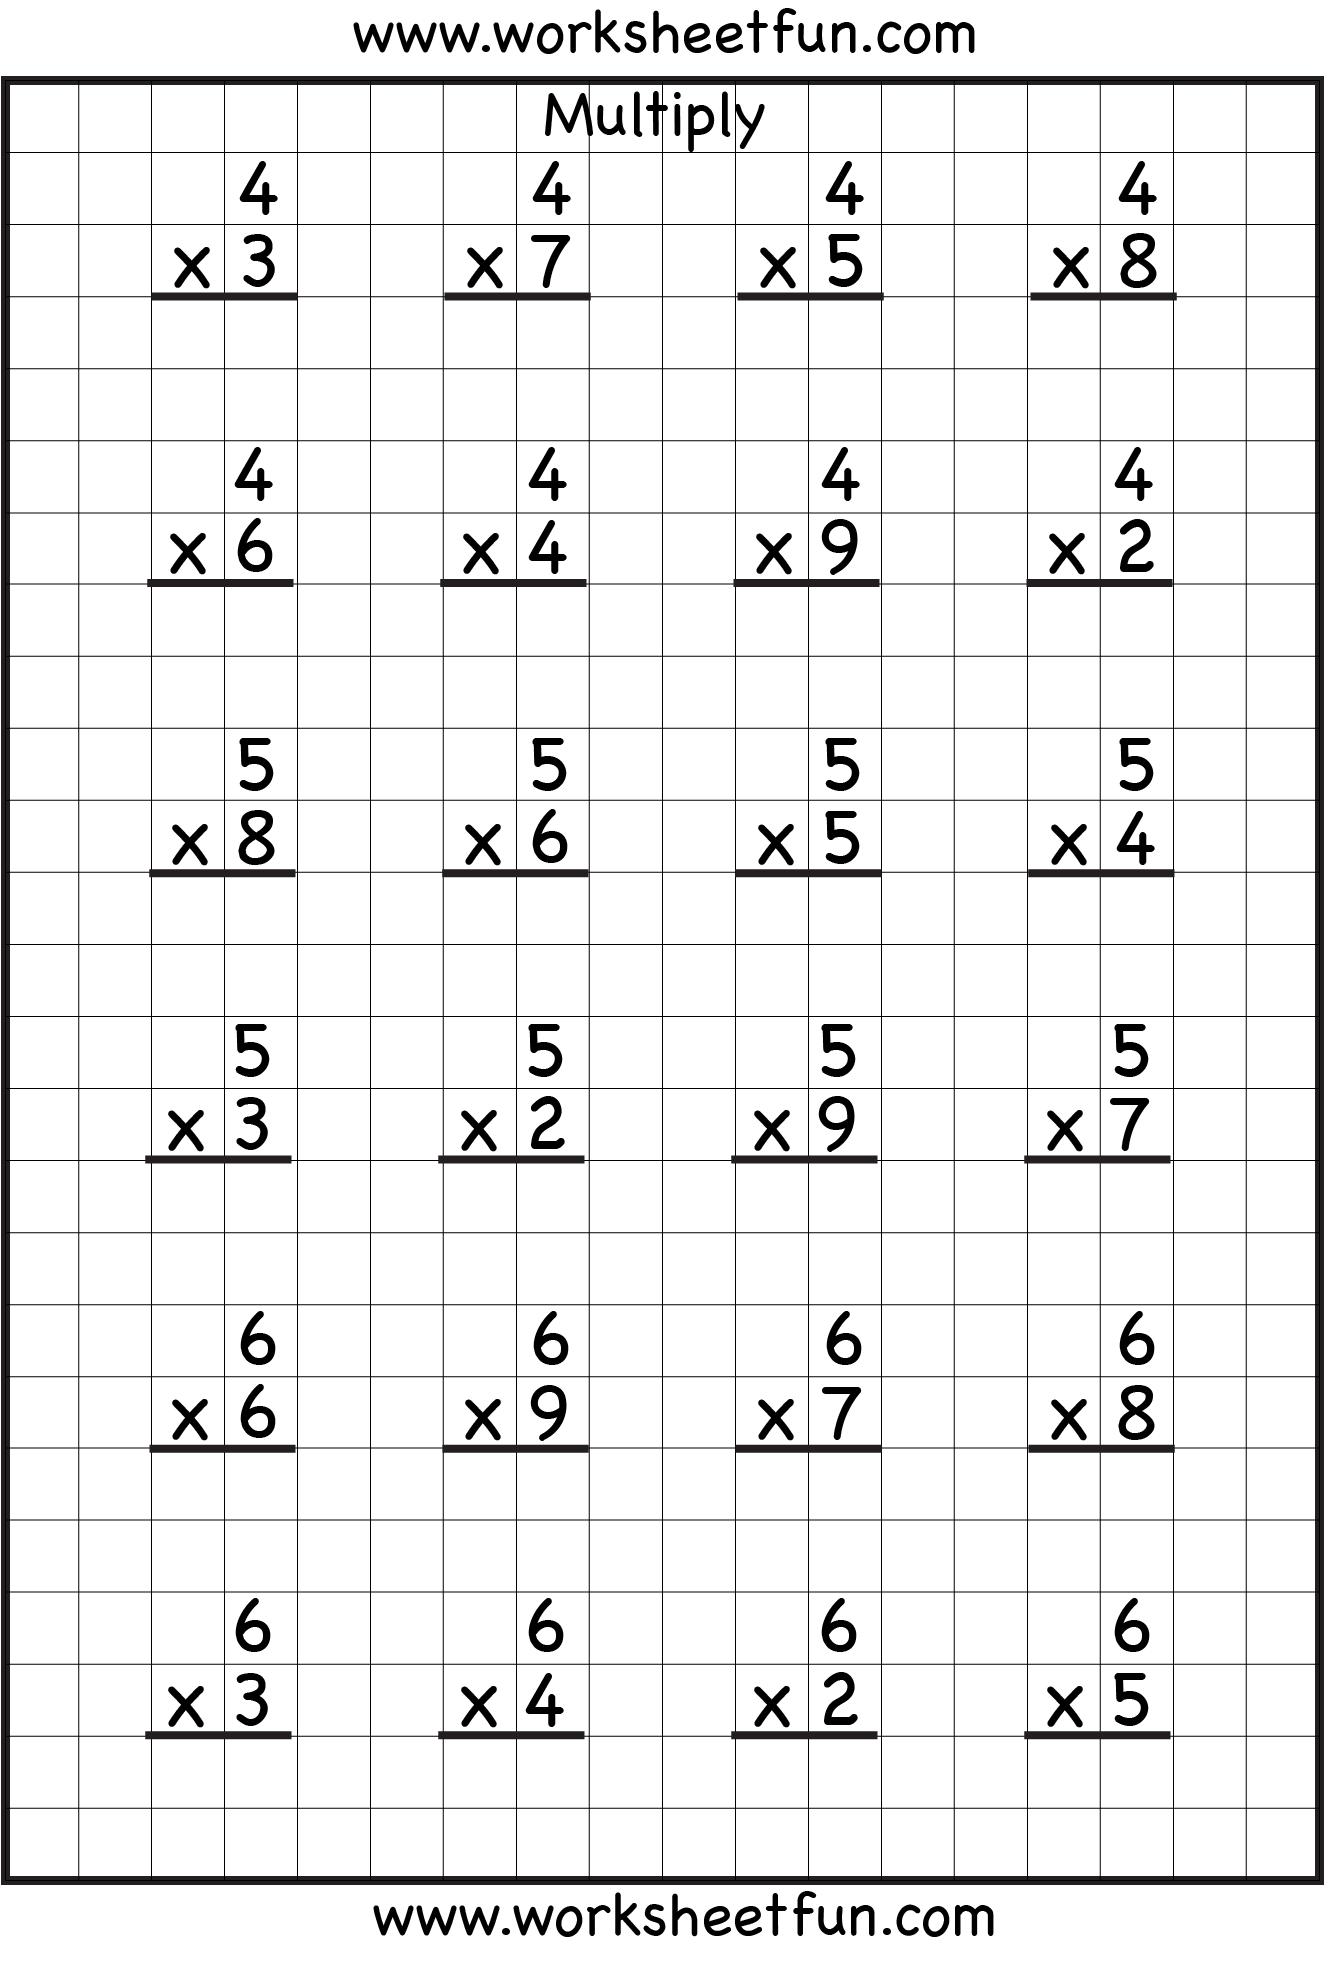 single-digit-multiplication-8-worksheets-free-printable-worksheets